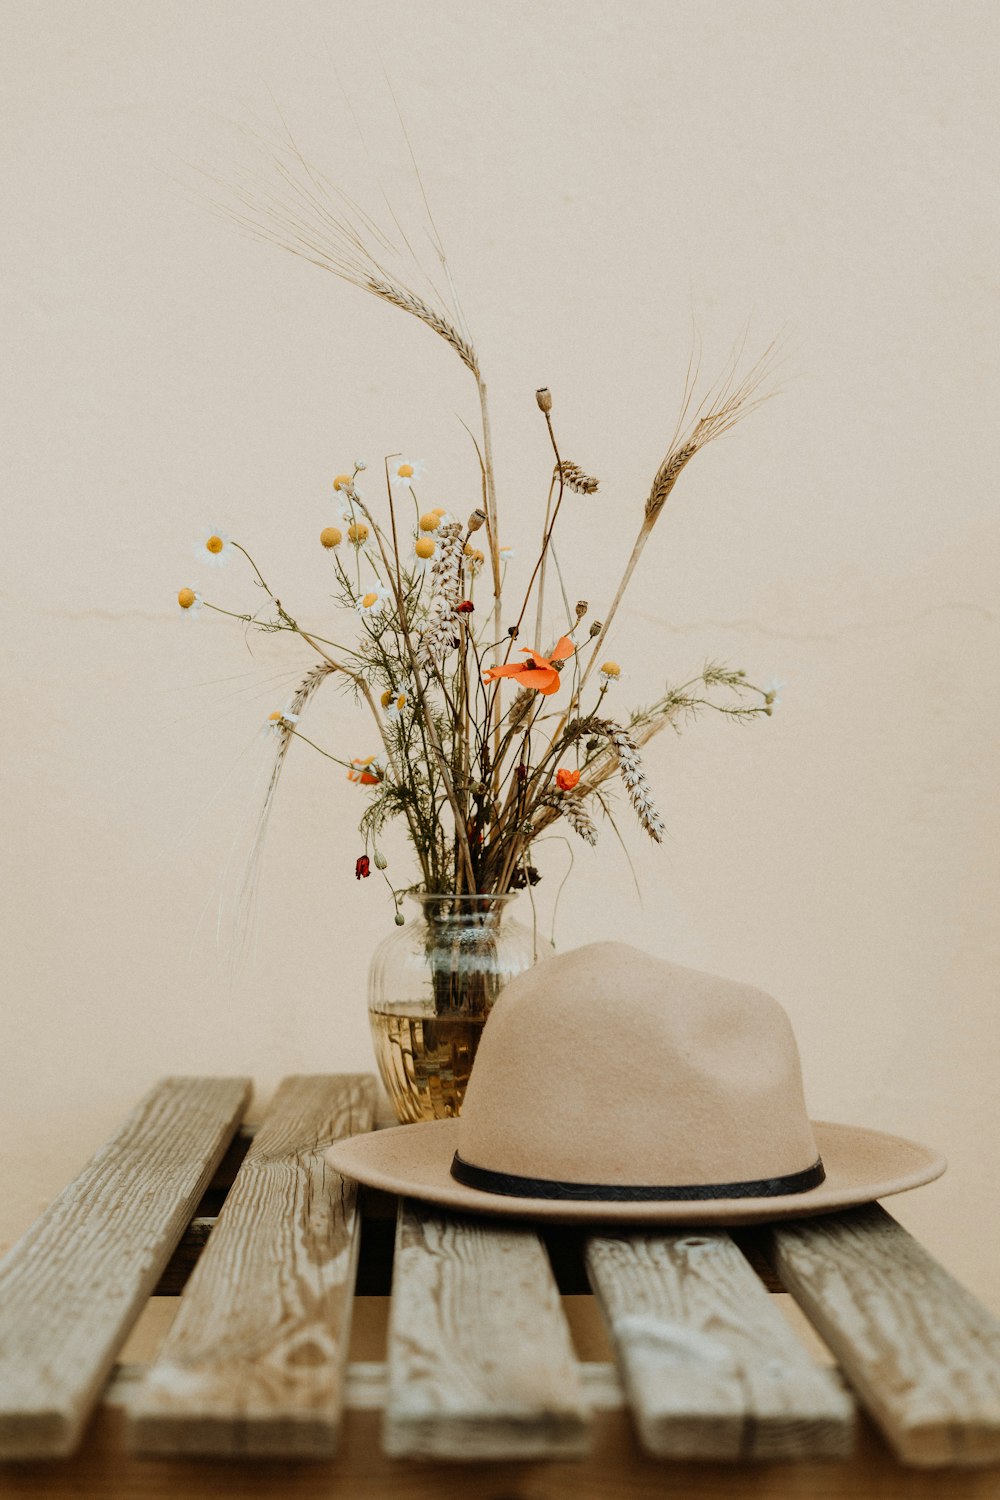 brown hat on wooden table beside flower in vase